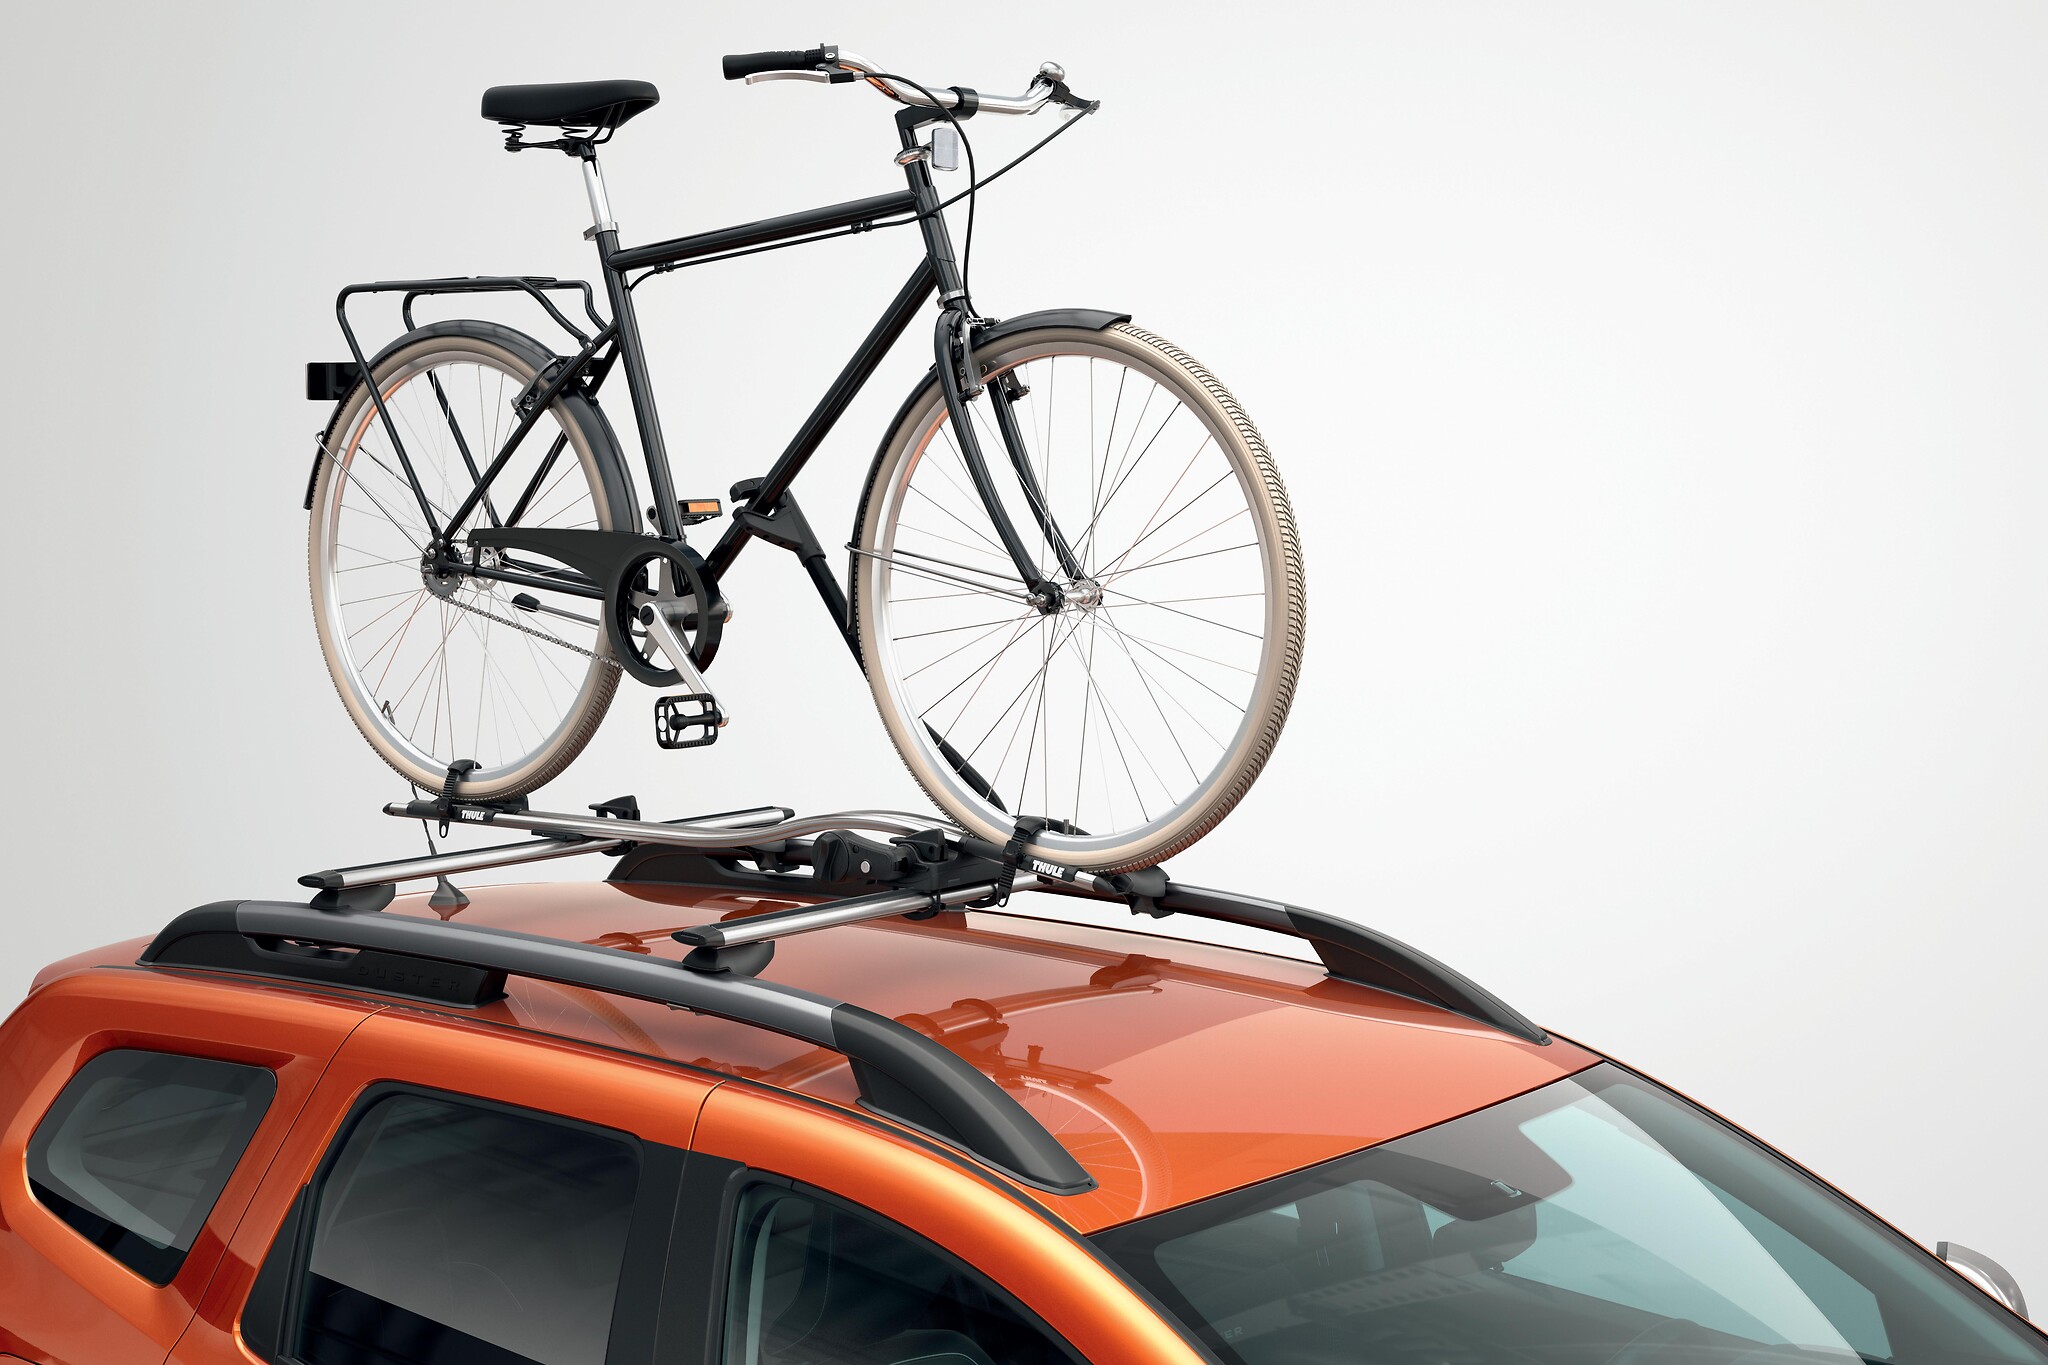 Porta-bicicletas Expert nas barras de tejadilho - 1 bicicleta